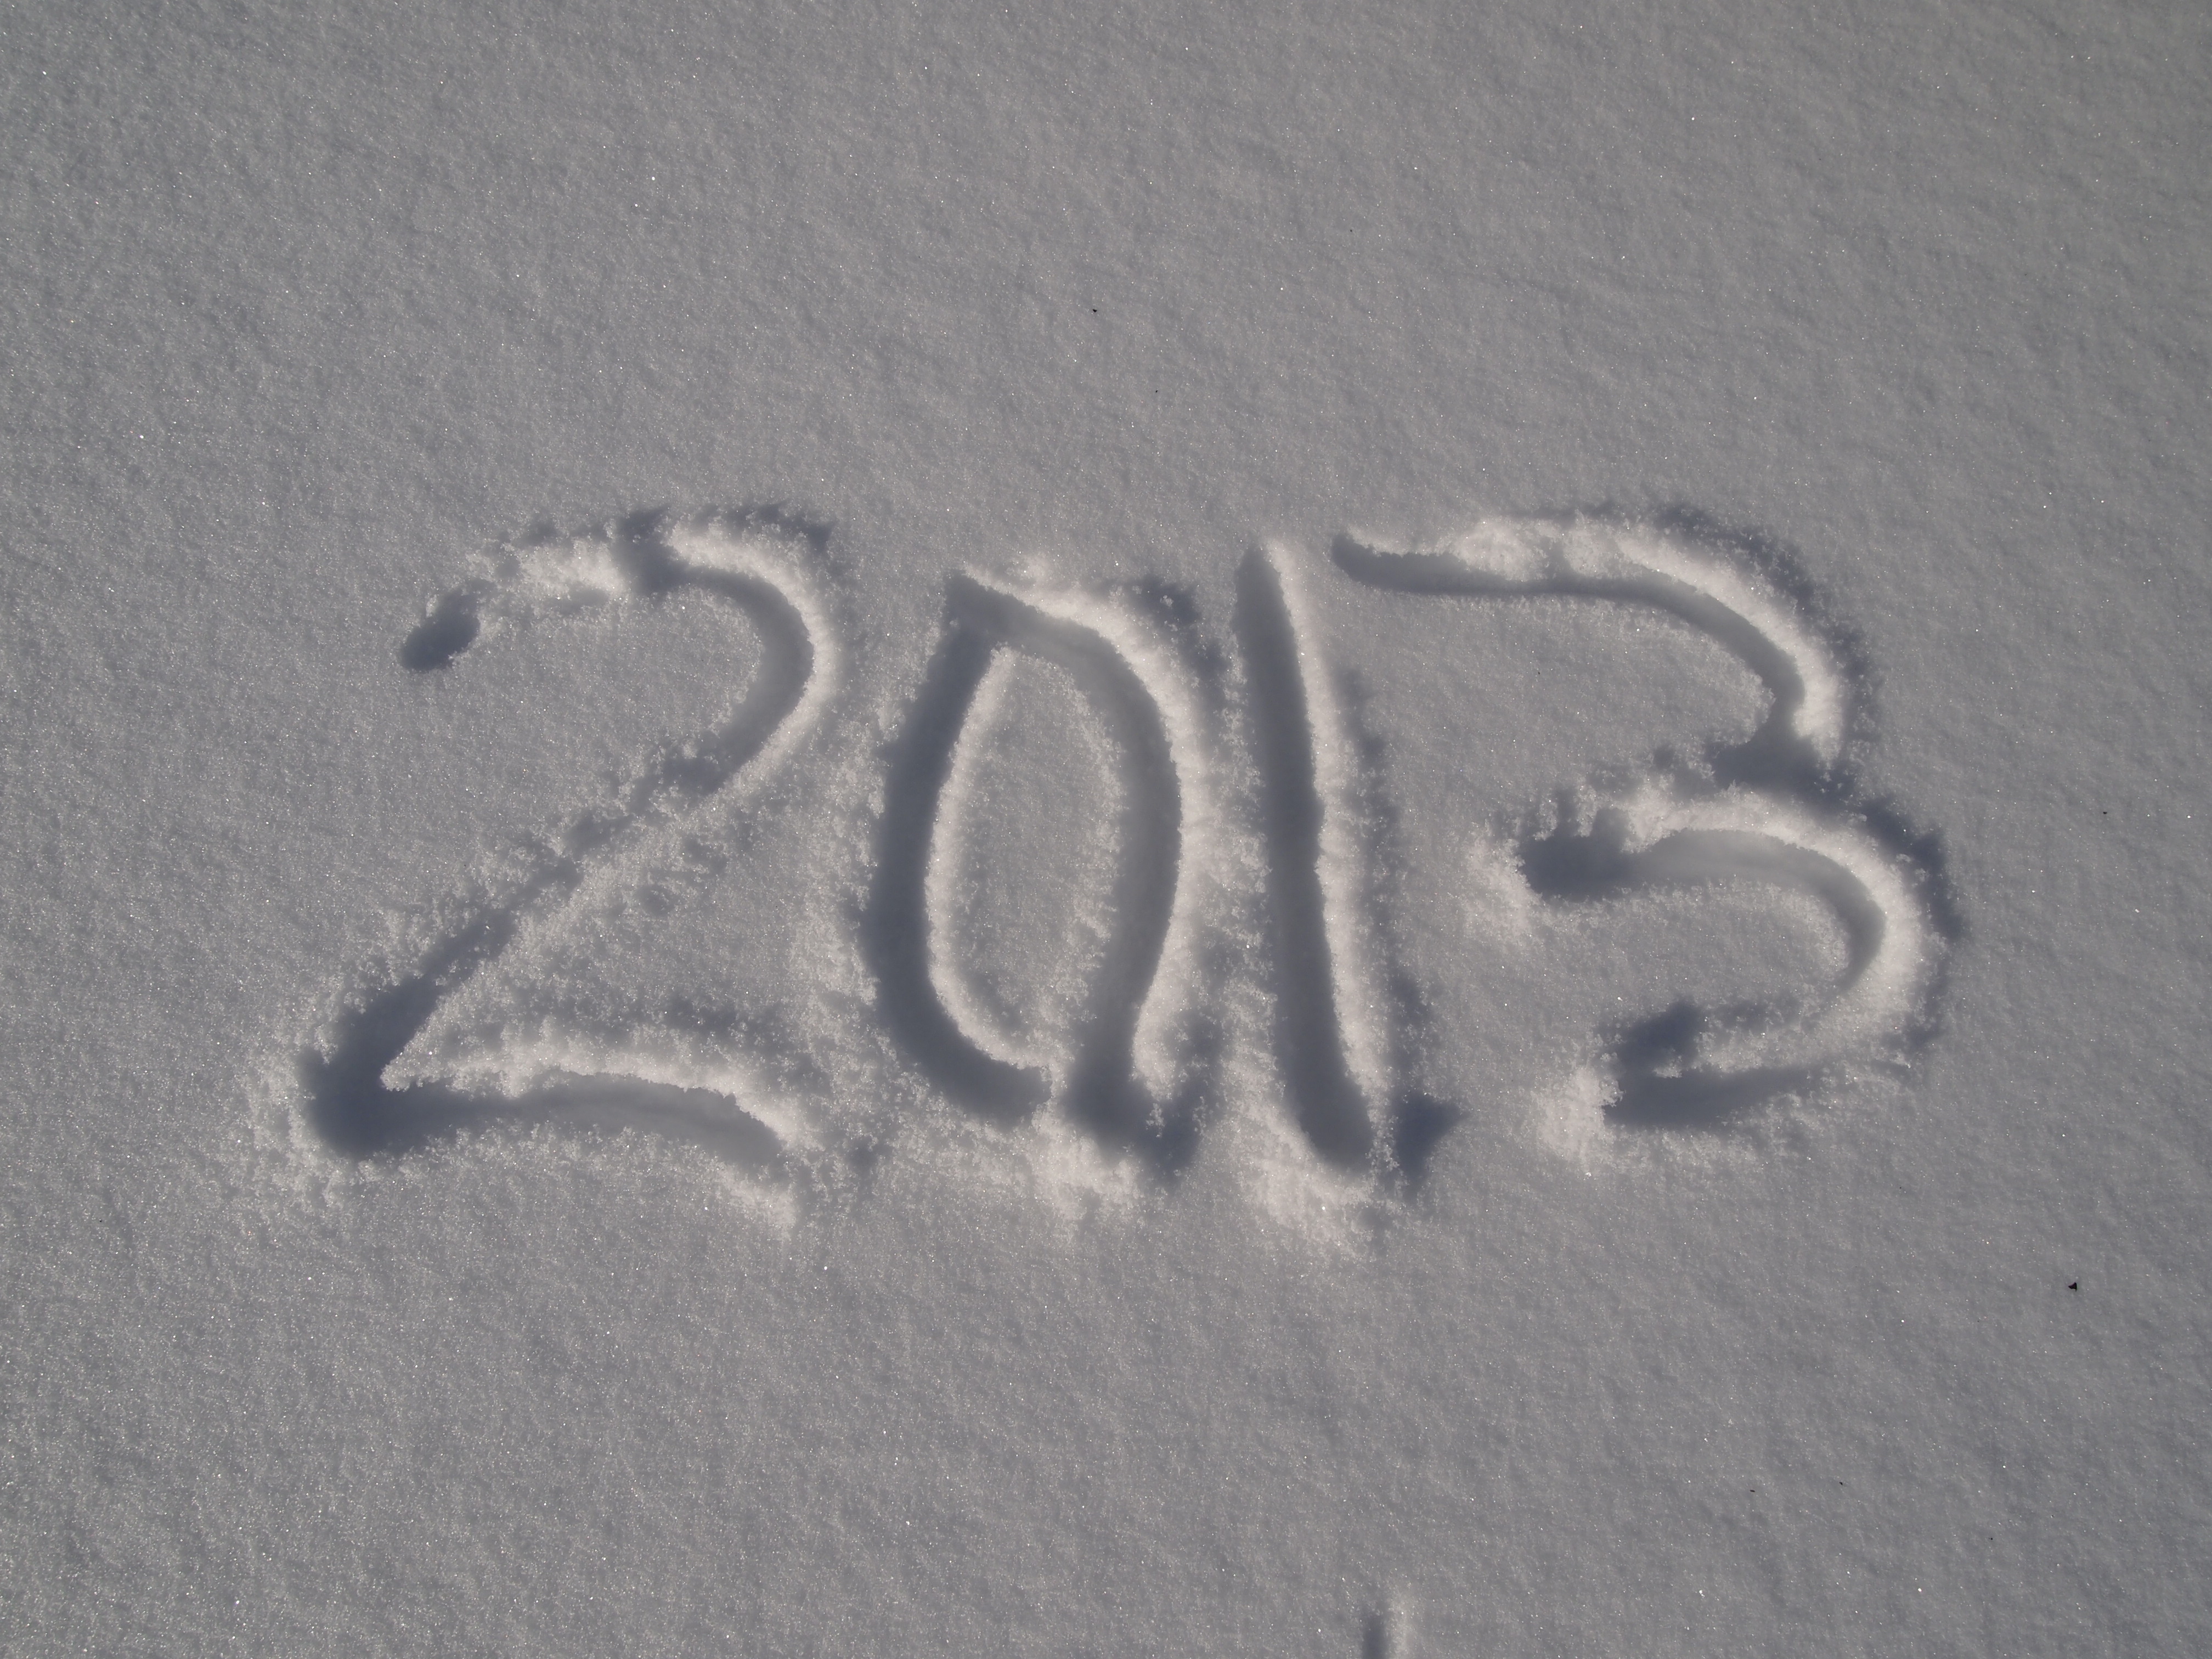 2013 - Happy New Year from Snowy Canada